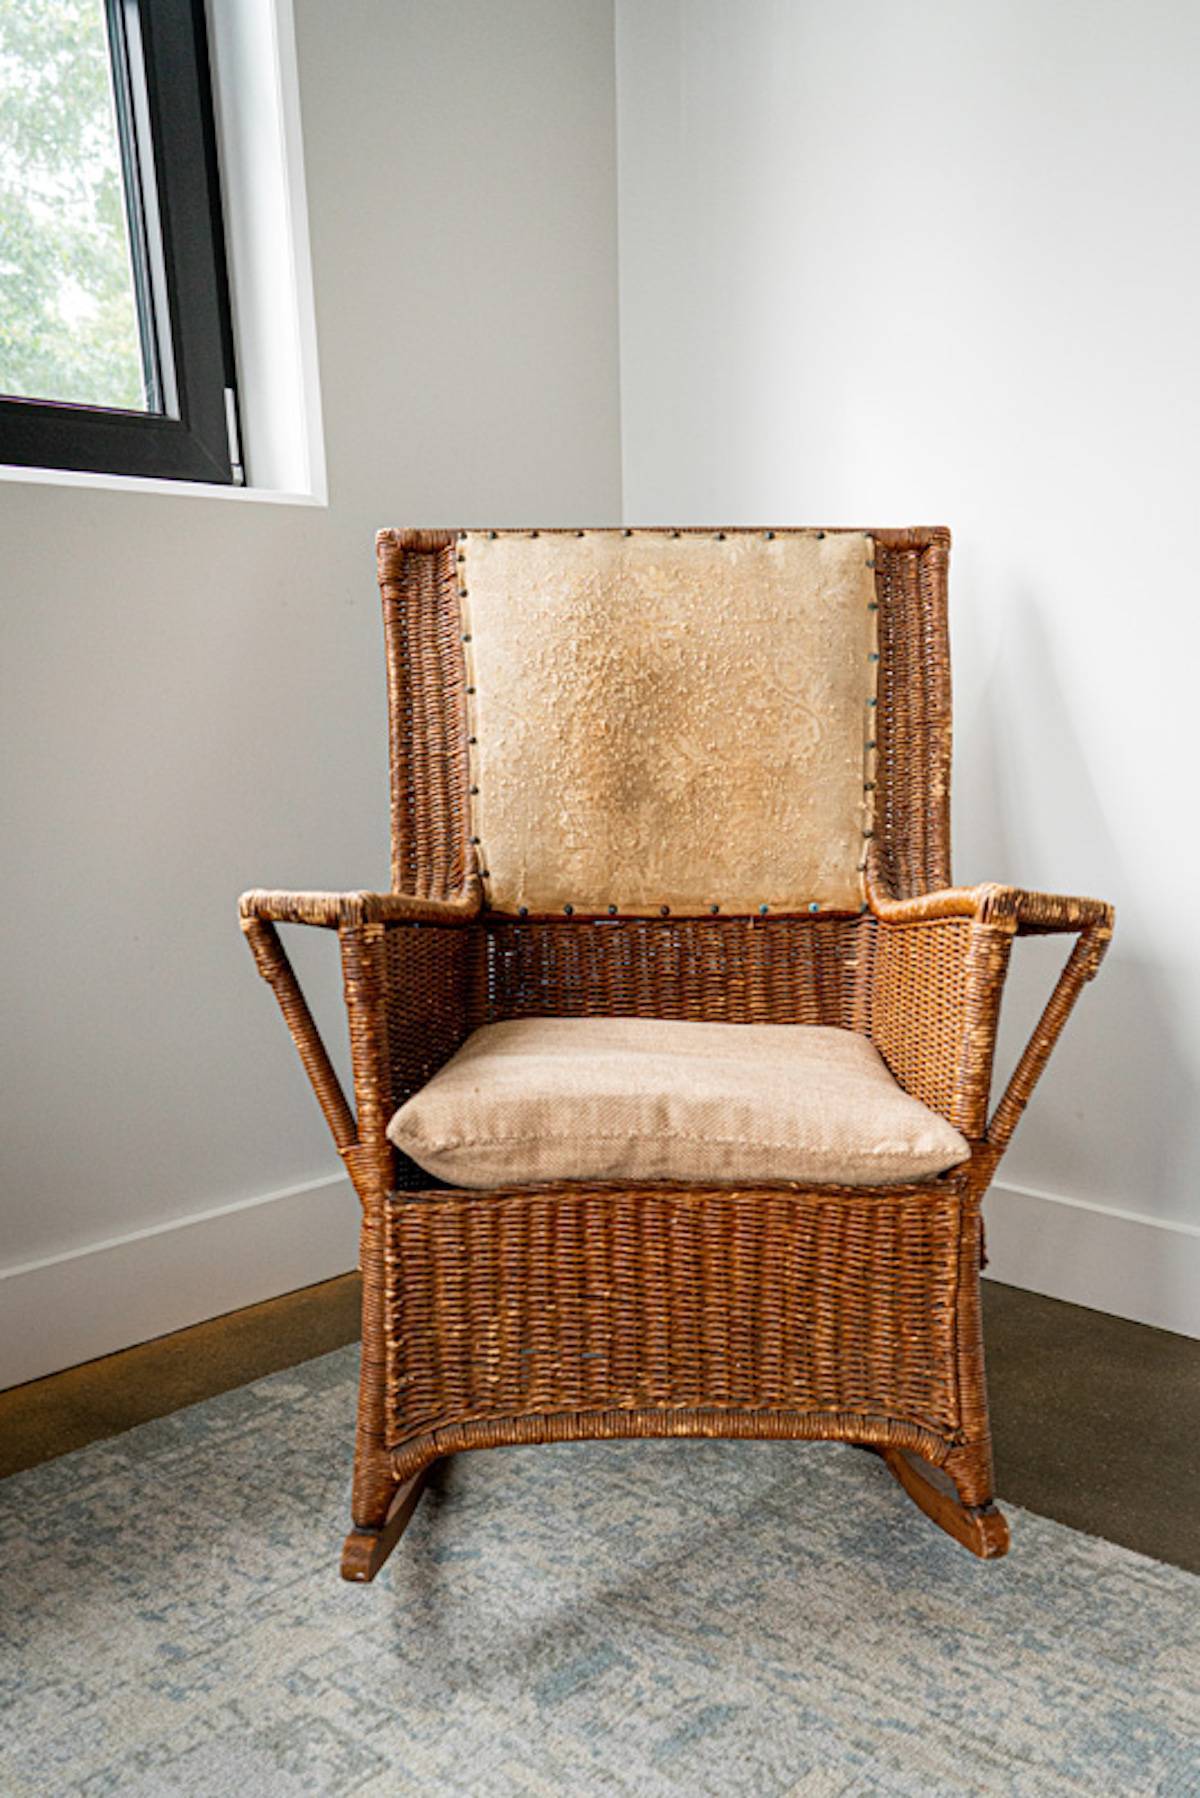 Wicker chair detail